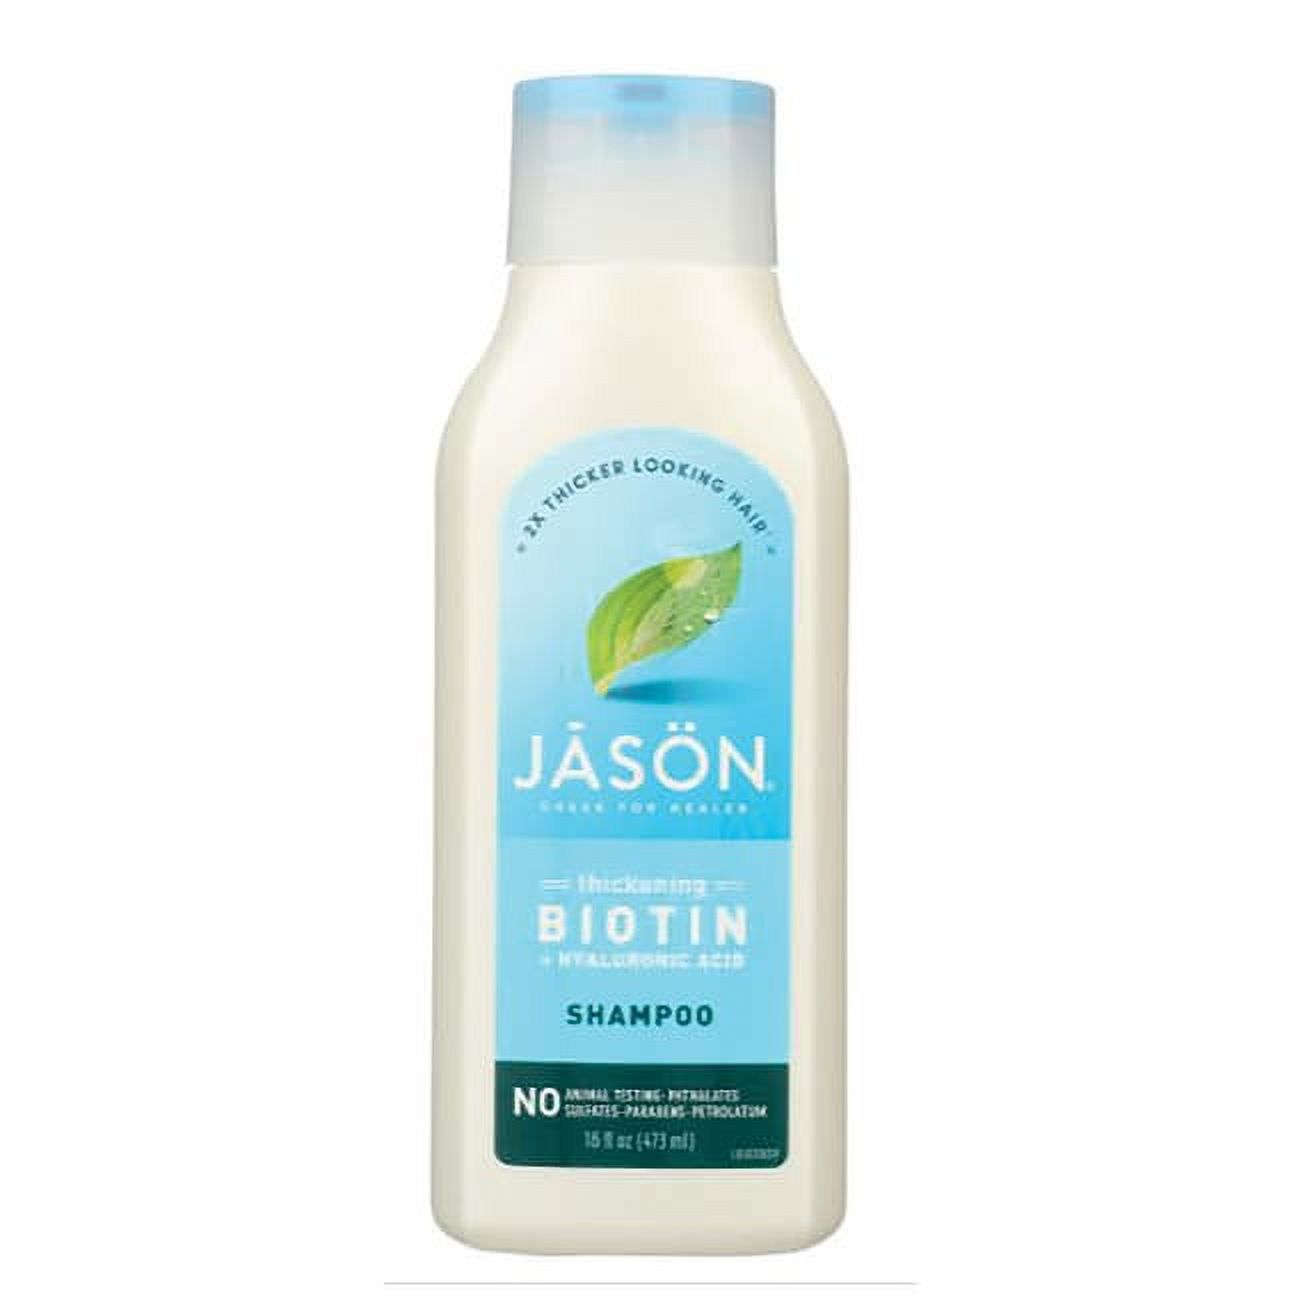 Jason Restorative Biotin Shampoo, 16 oz Bottle - image 1 of 2